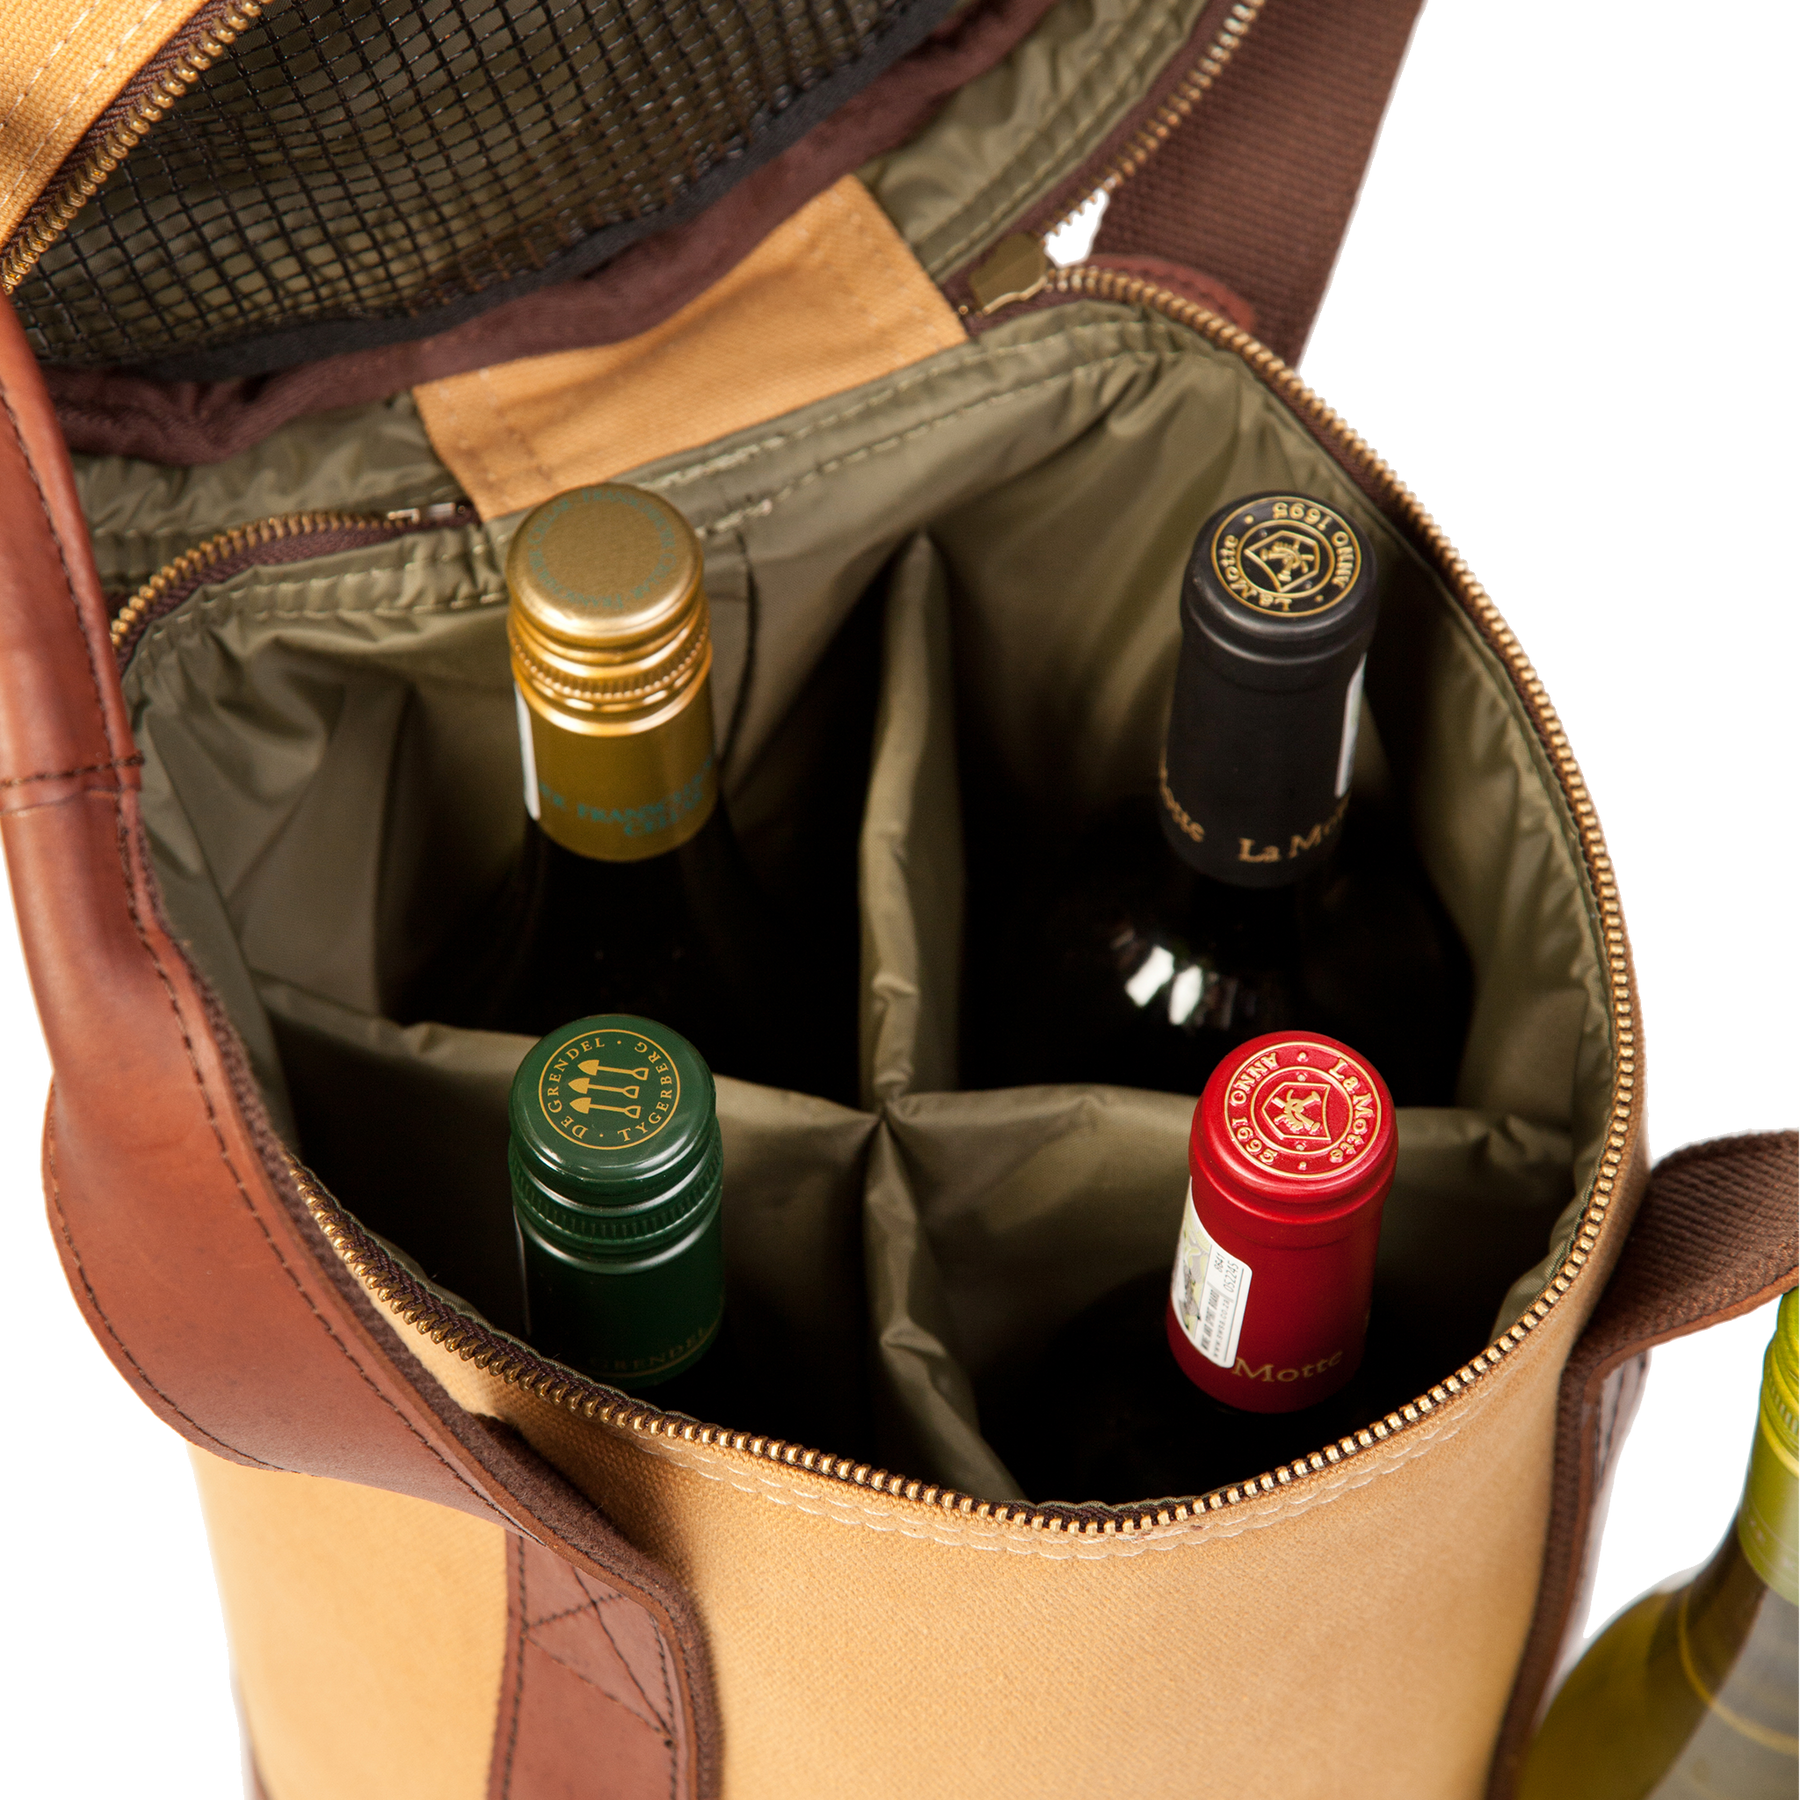 Djembe Wine Carrier - 4 Bottles   Melvill & Moon USA- Overland Kitted